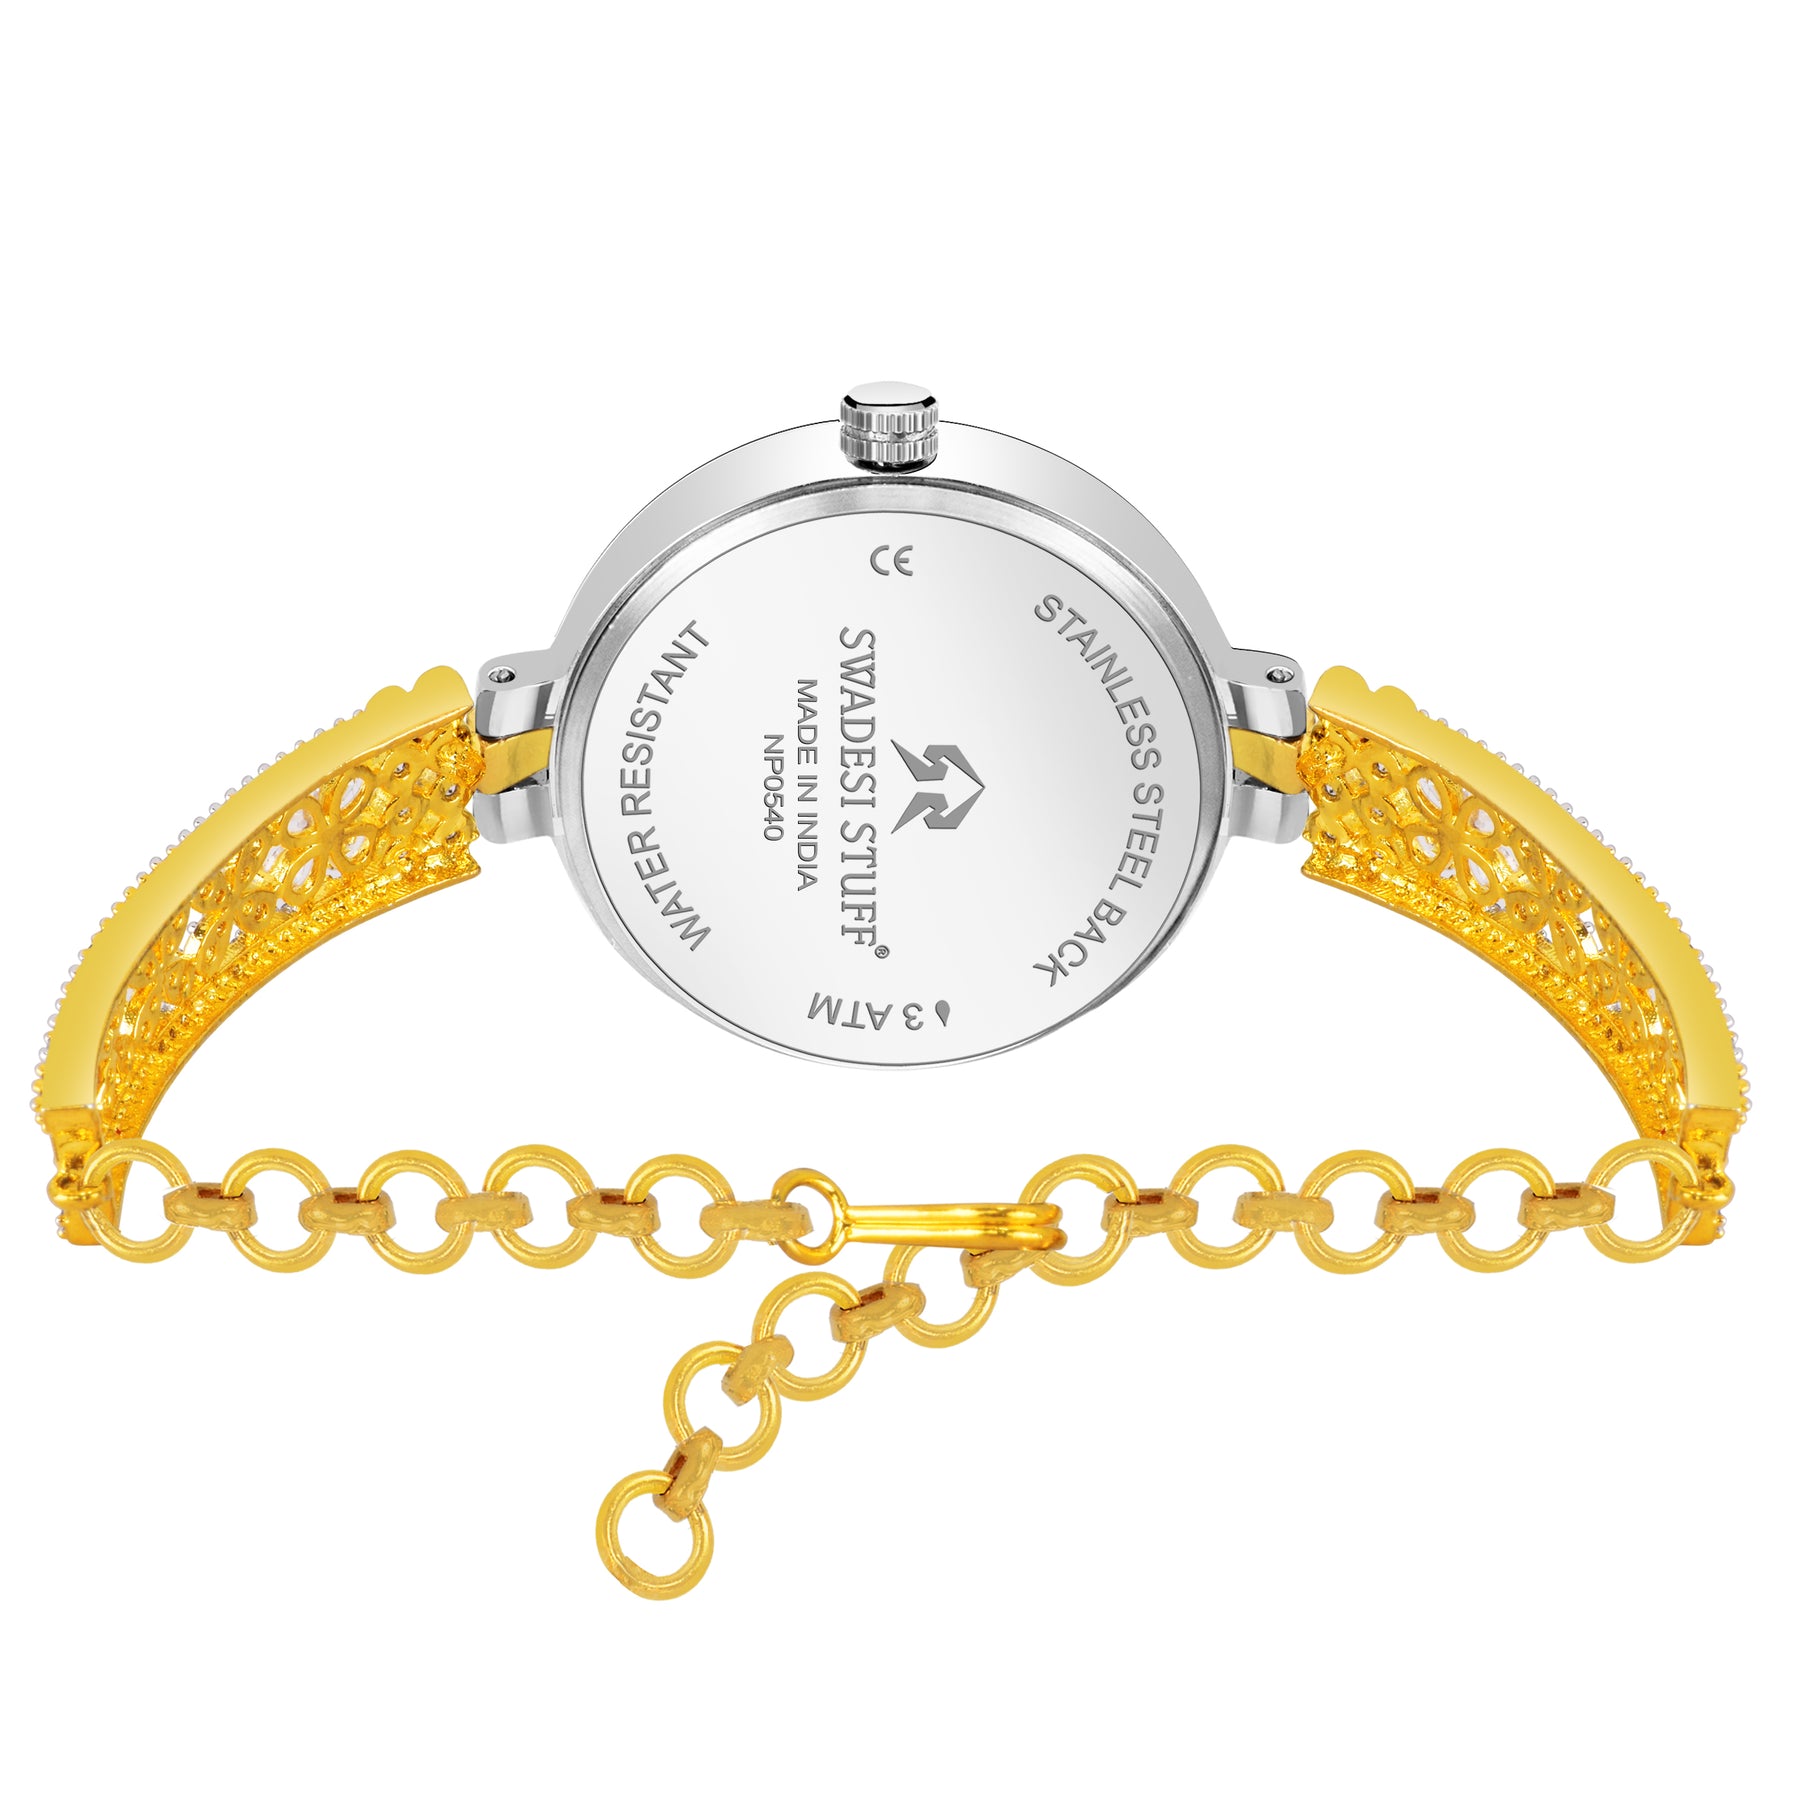 Diadem - Gold - Premium & Luxurious Metal Watch For Women